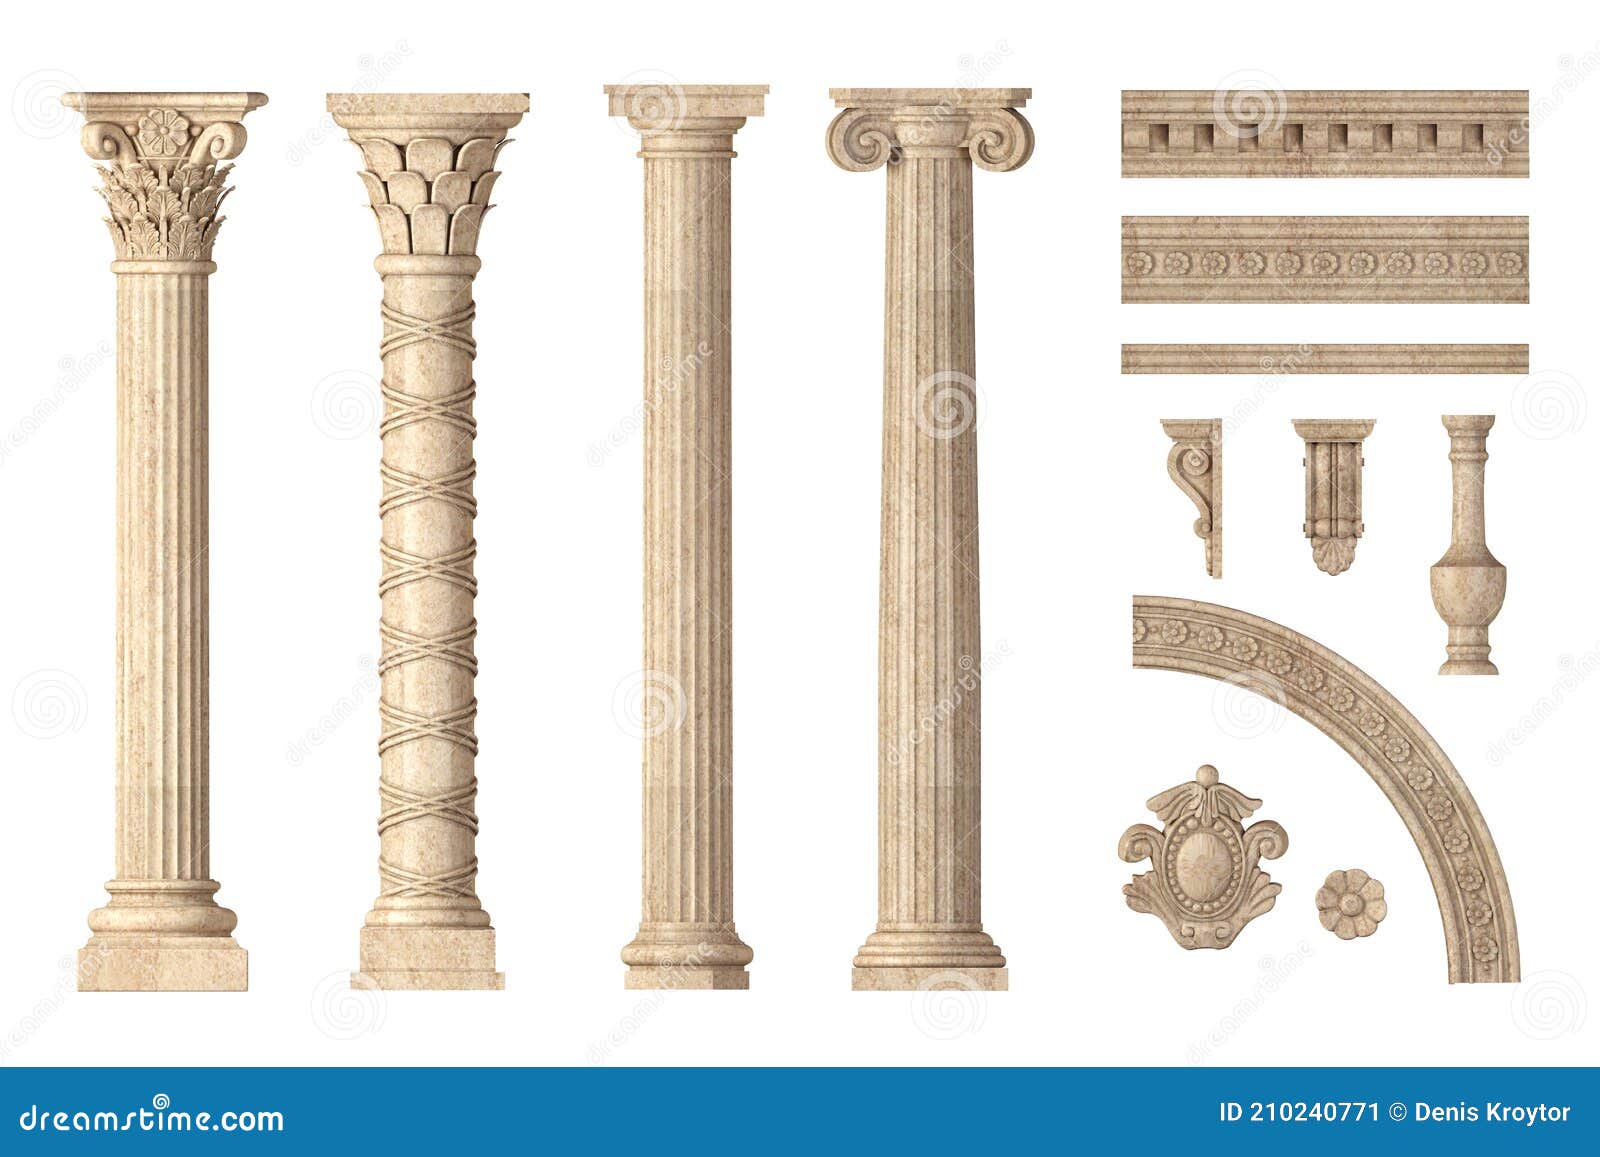 classic antique marble columns set